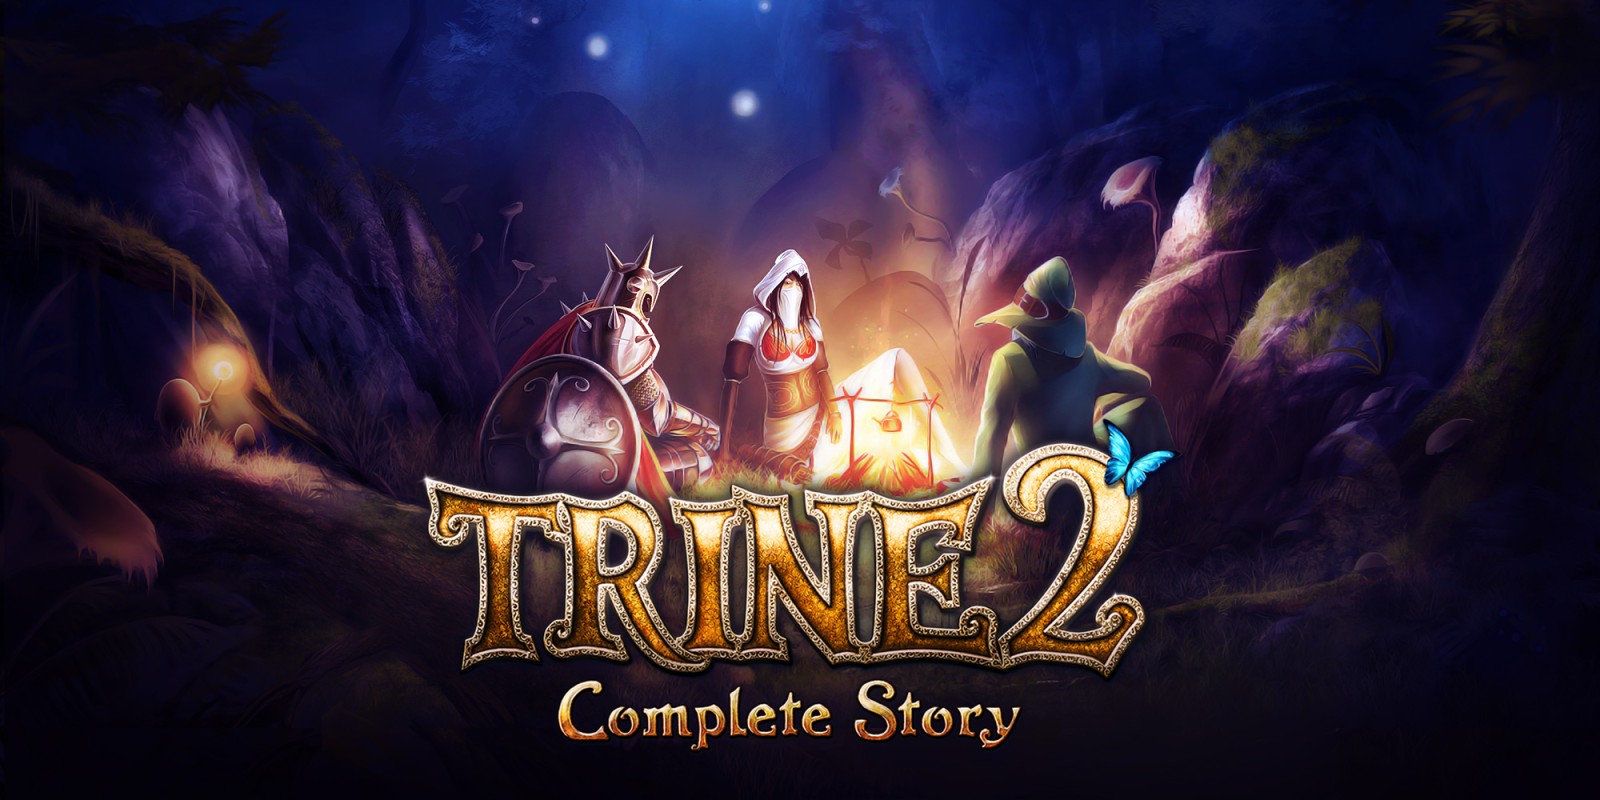 trine story download free